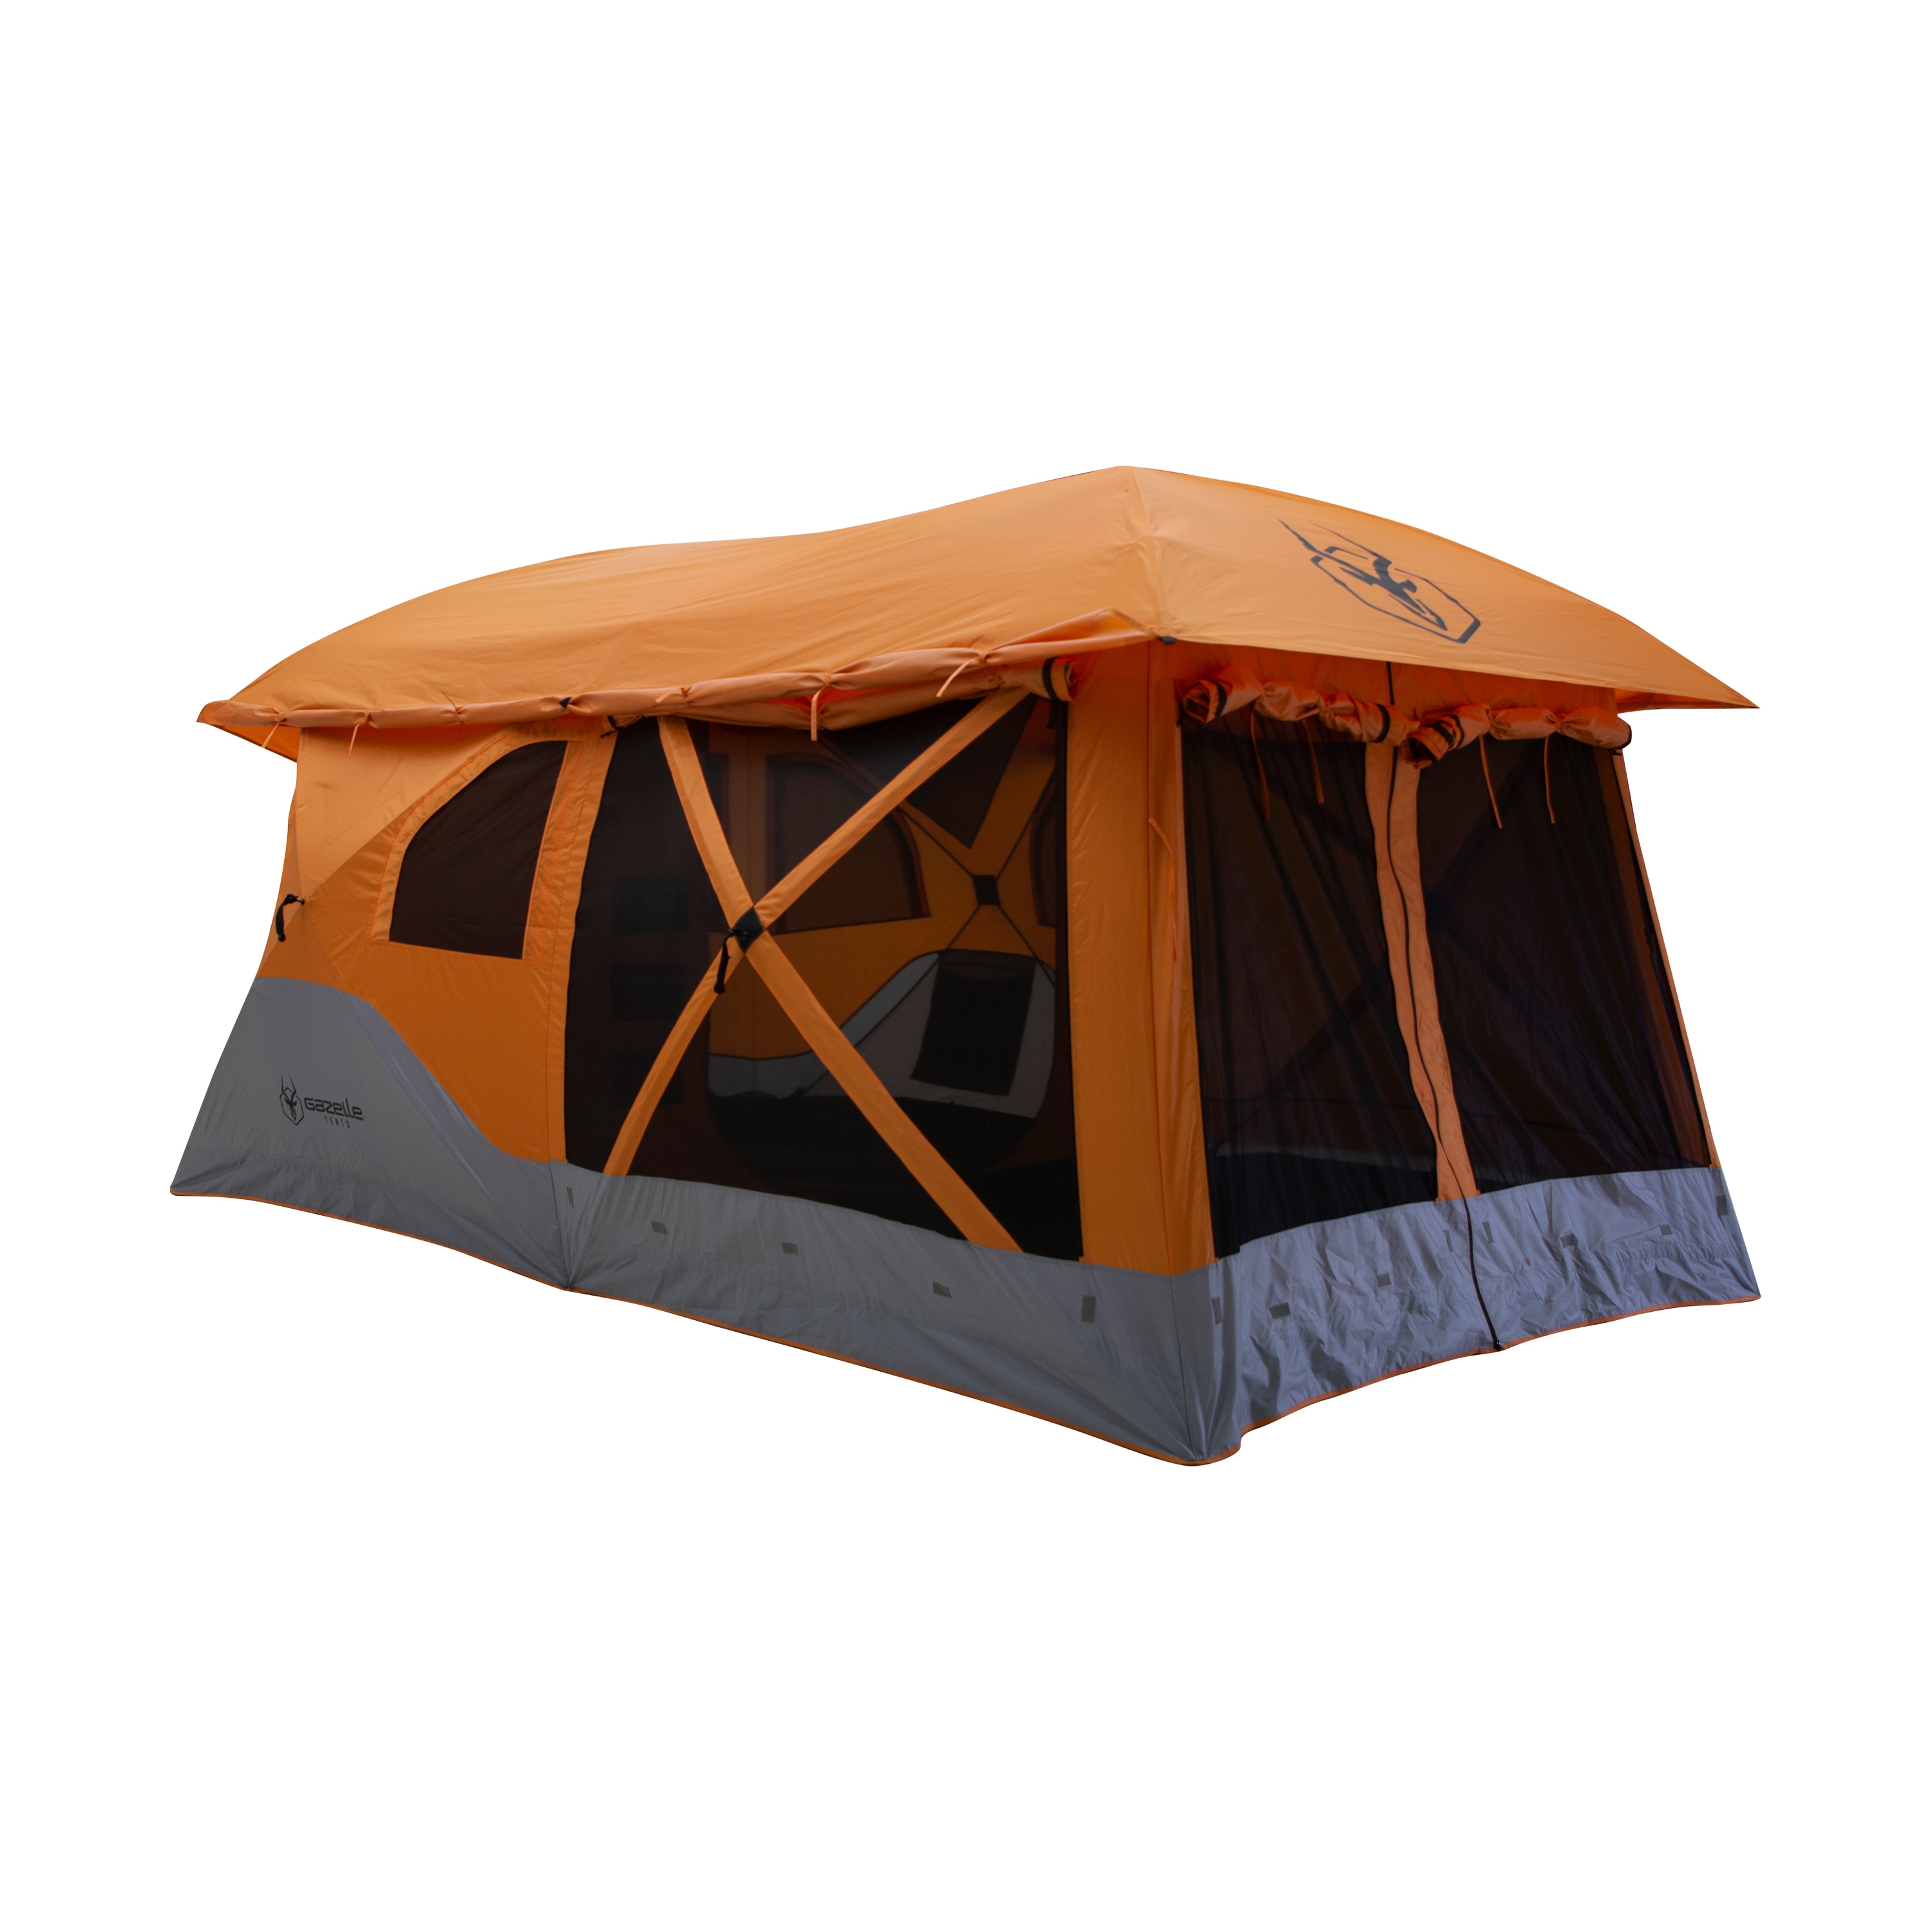 Ardisam, Inc. 3 Person Tent (Set of 2)